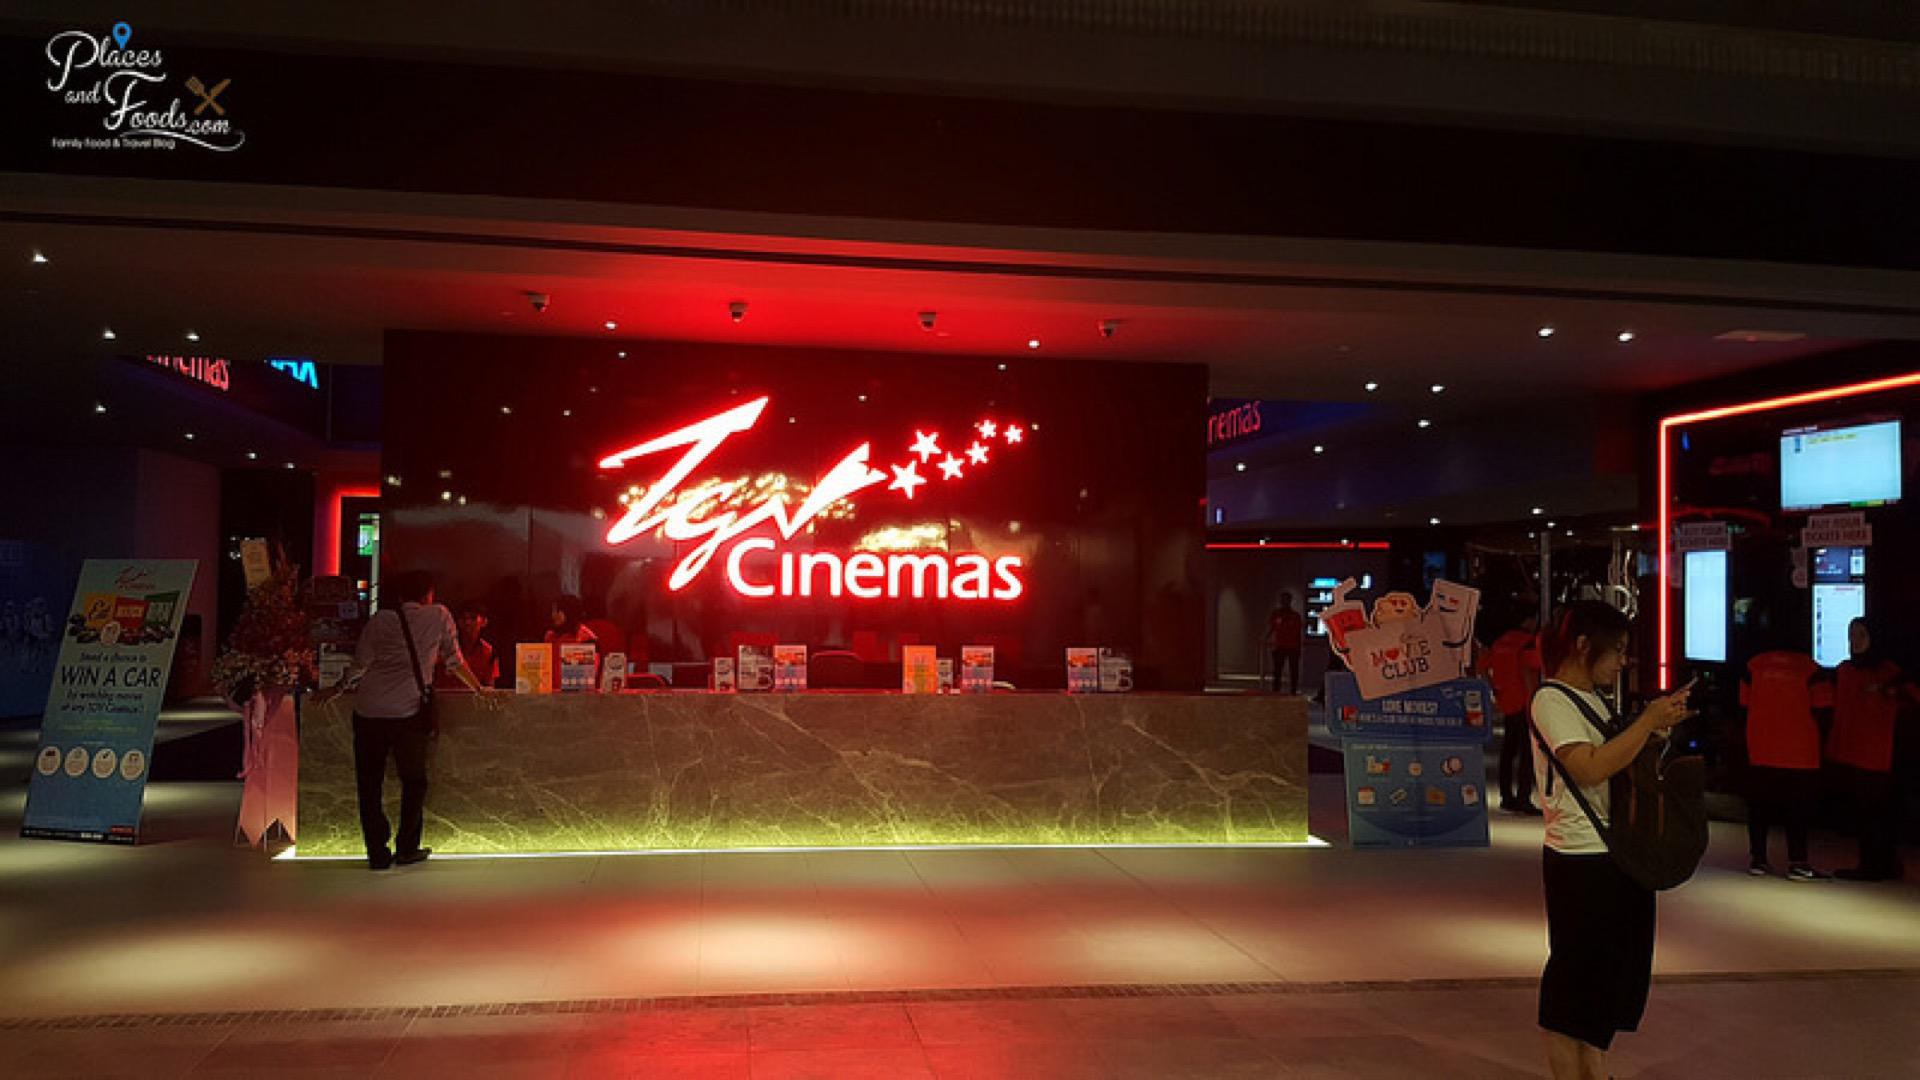 Velocity tgv TGV Cinemas